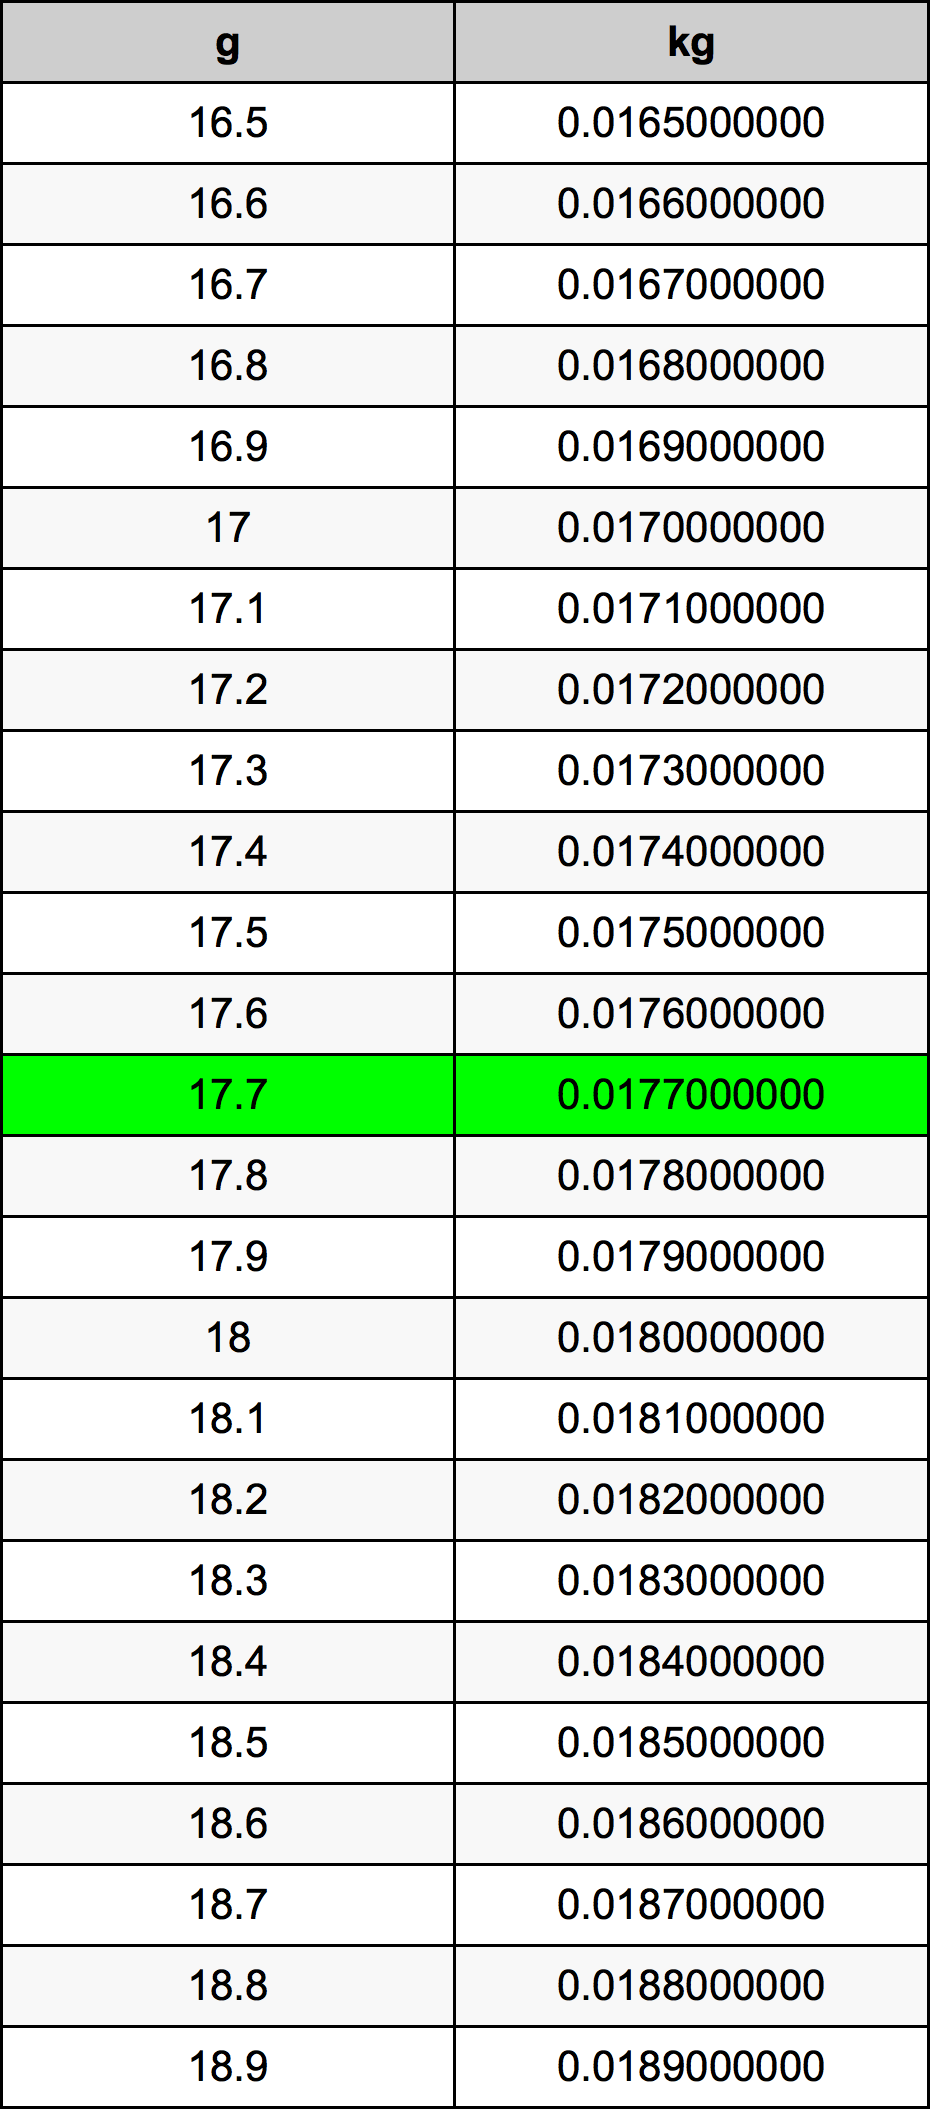 17.7 غرام جدول تحويل